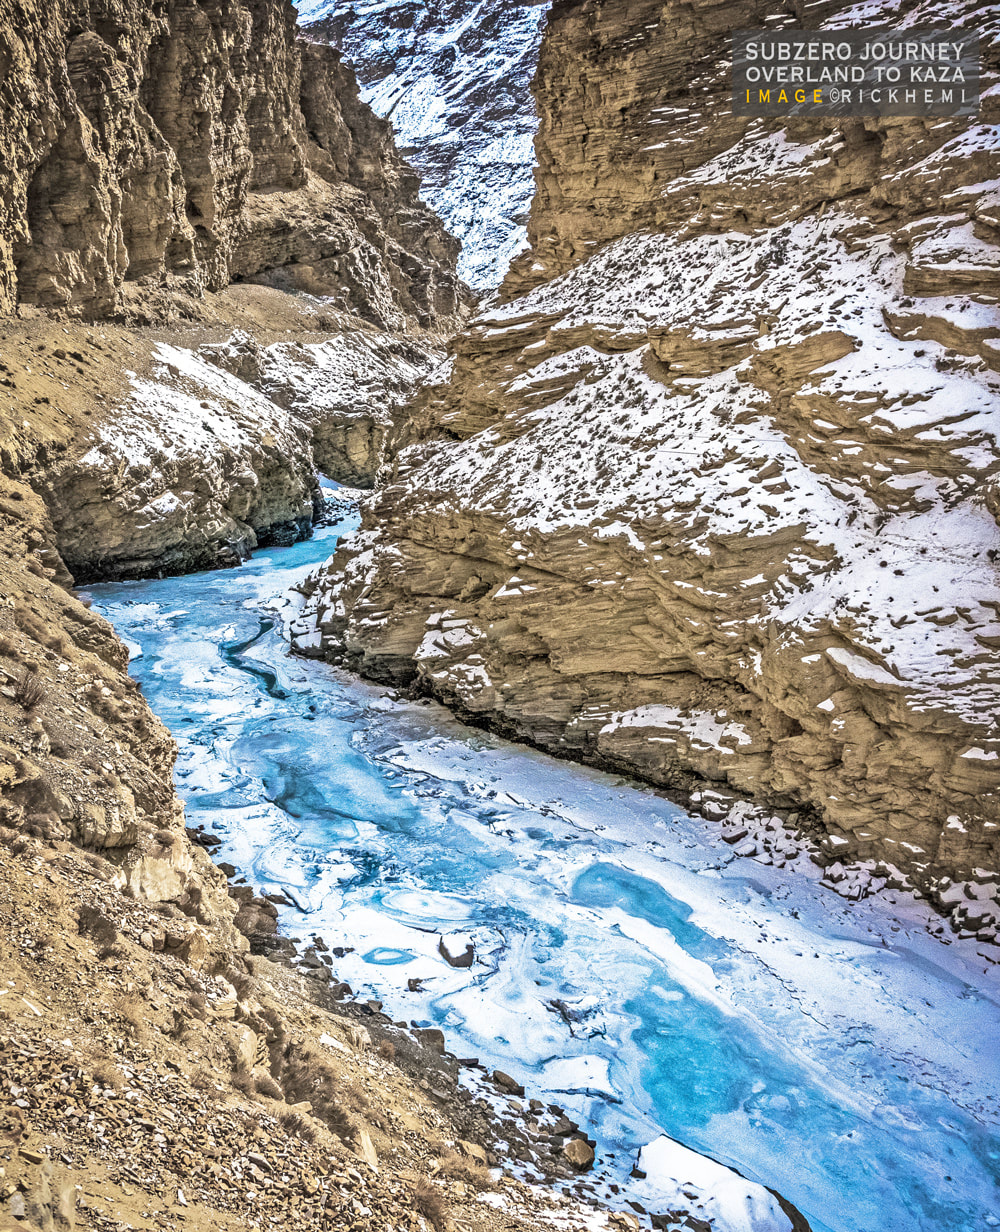 extreme midwinter overland journey Indian Himalaya, image by Rick Hemi